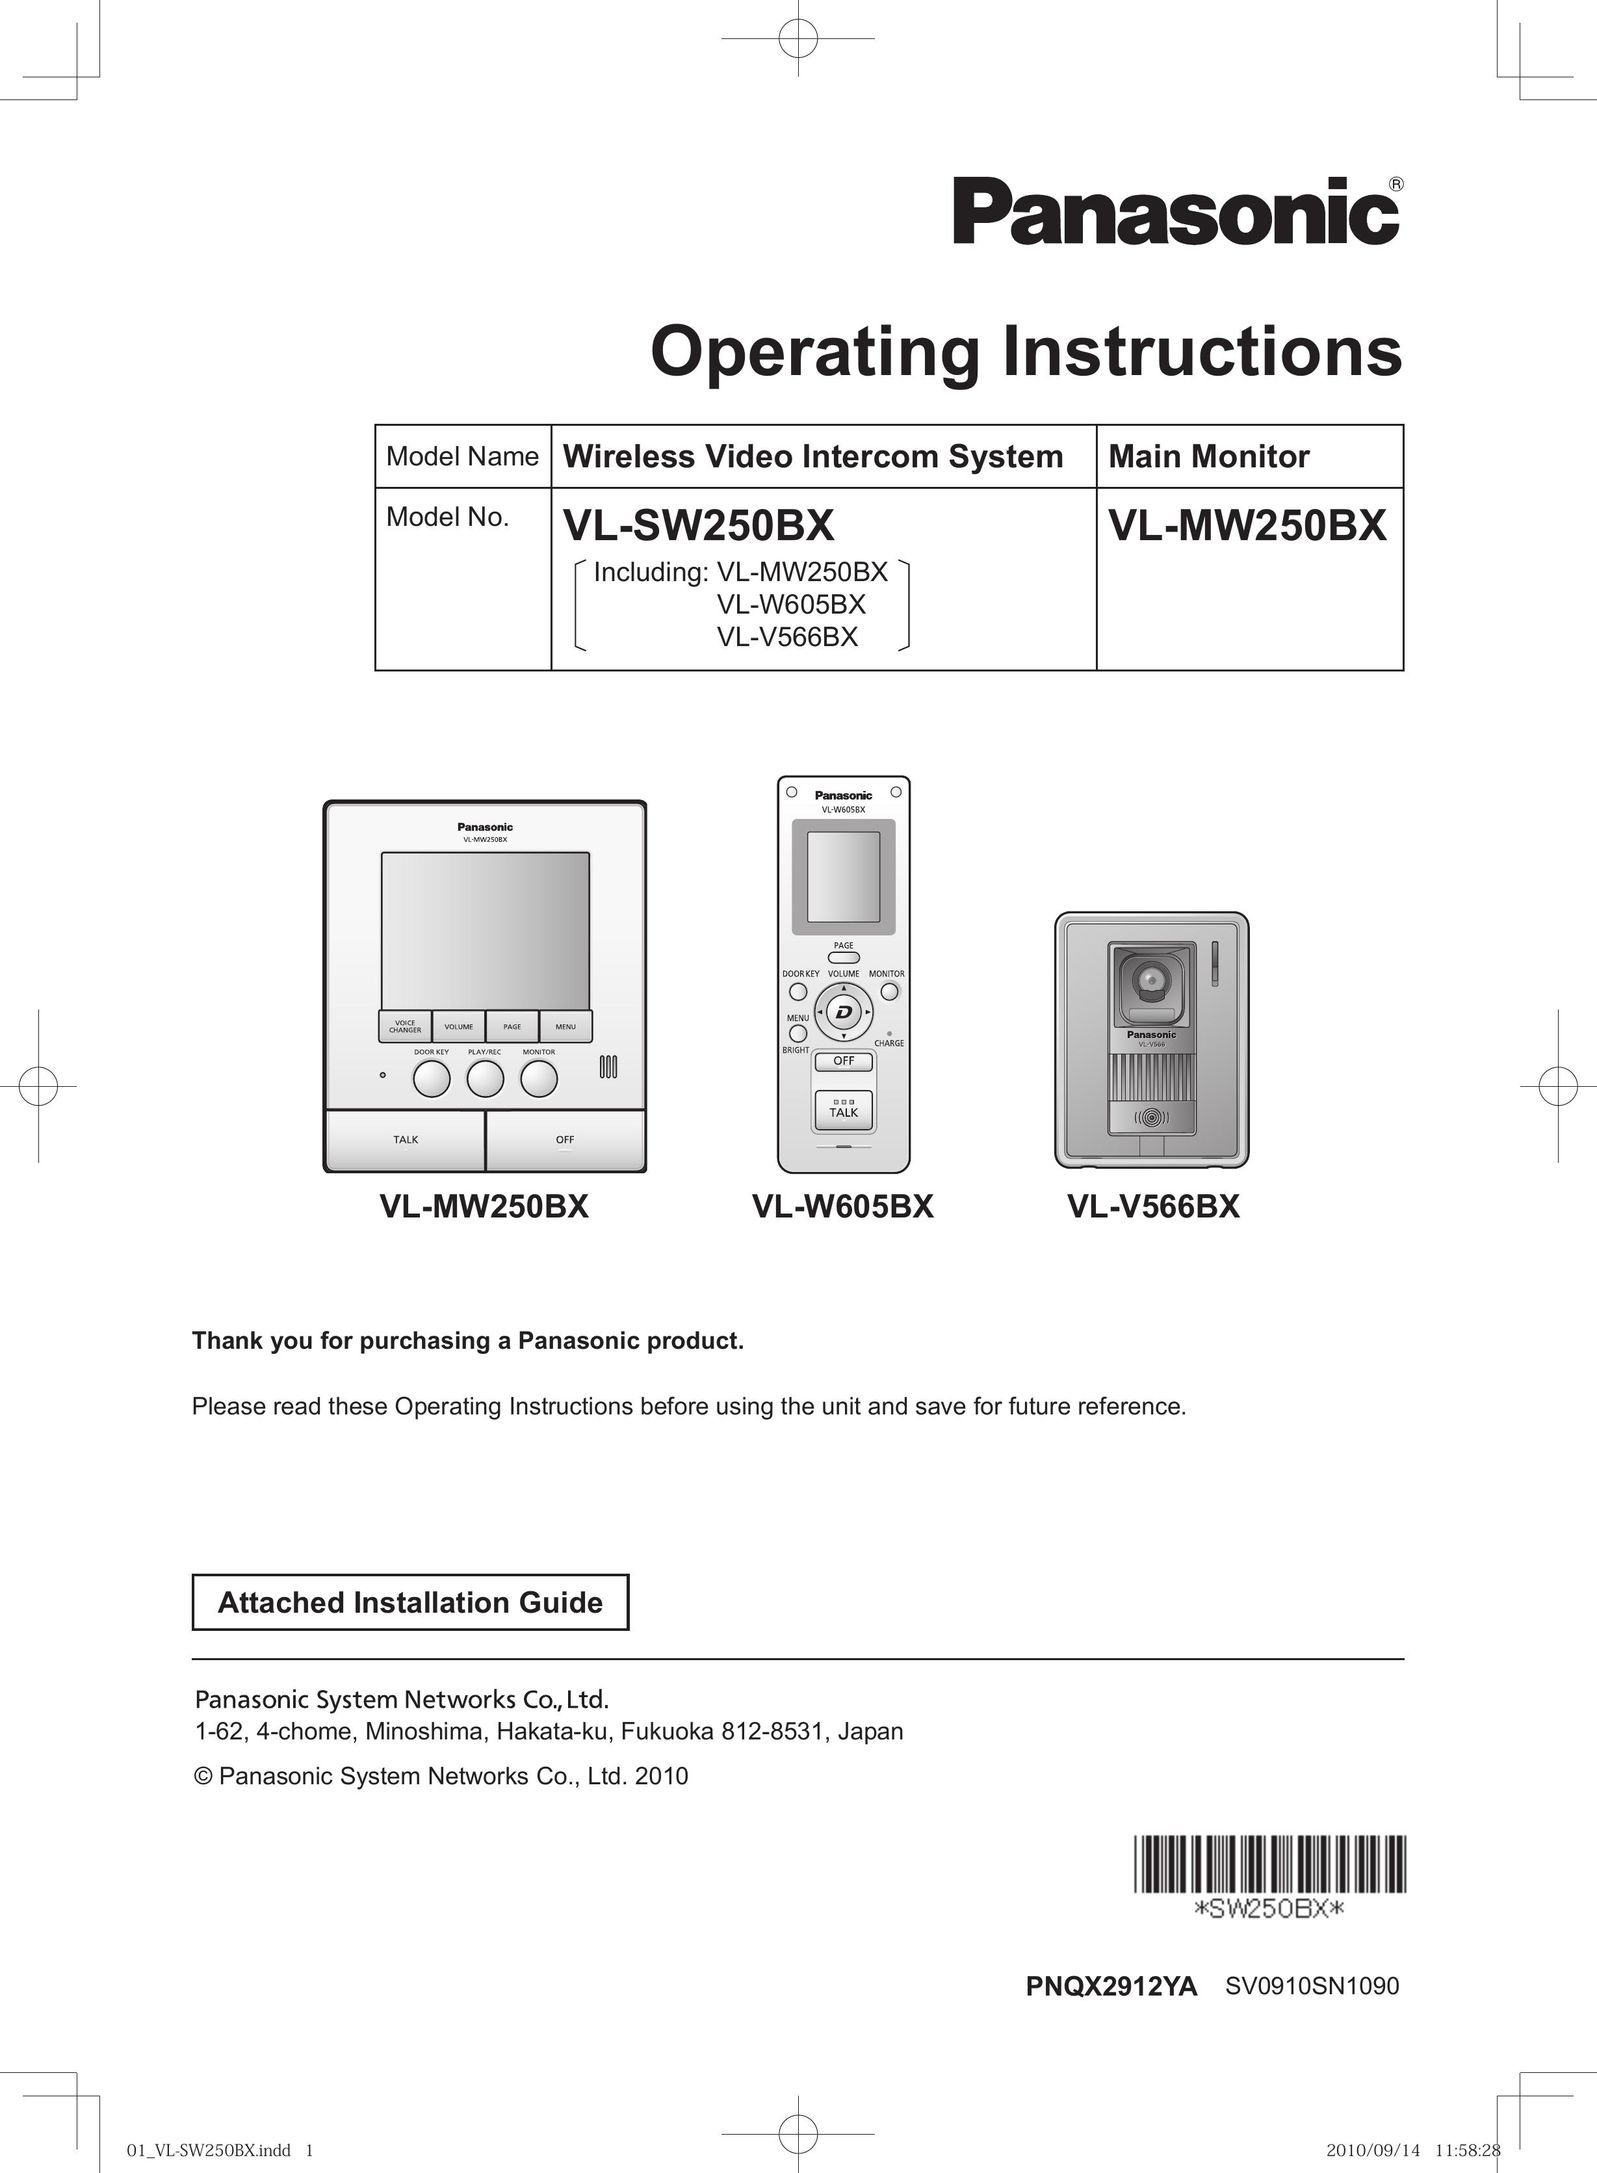 Panasonic VL-SW250BX Intercom System User Manual